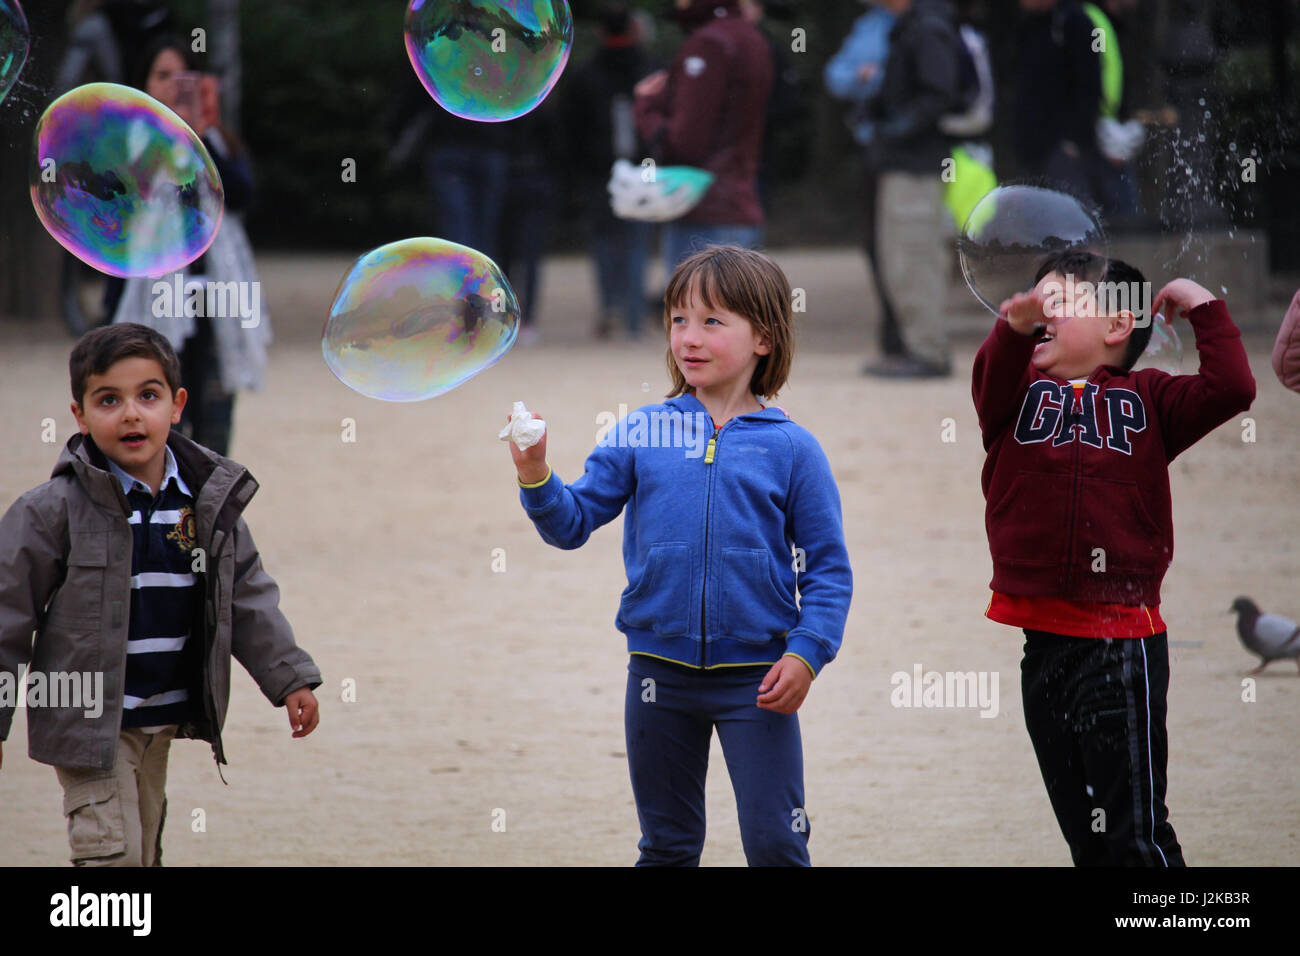 BARCELONA/SPAIN - 19 APRIL 2017: Childrean playing with big soap bubbles in Barcelona's Ciutadella park Stock Photo